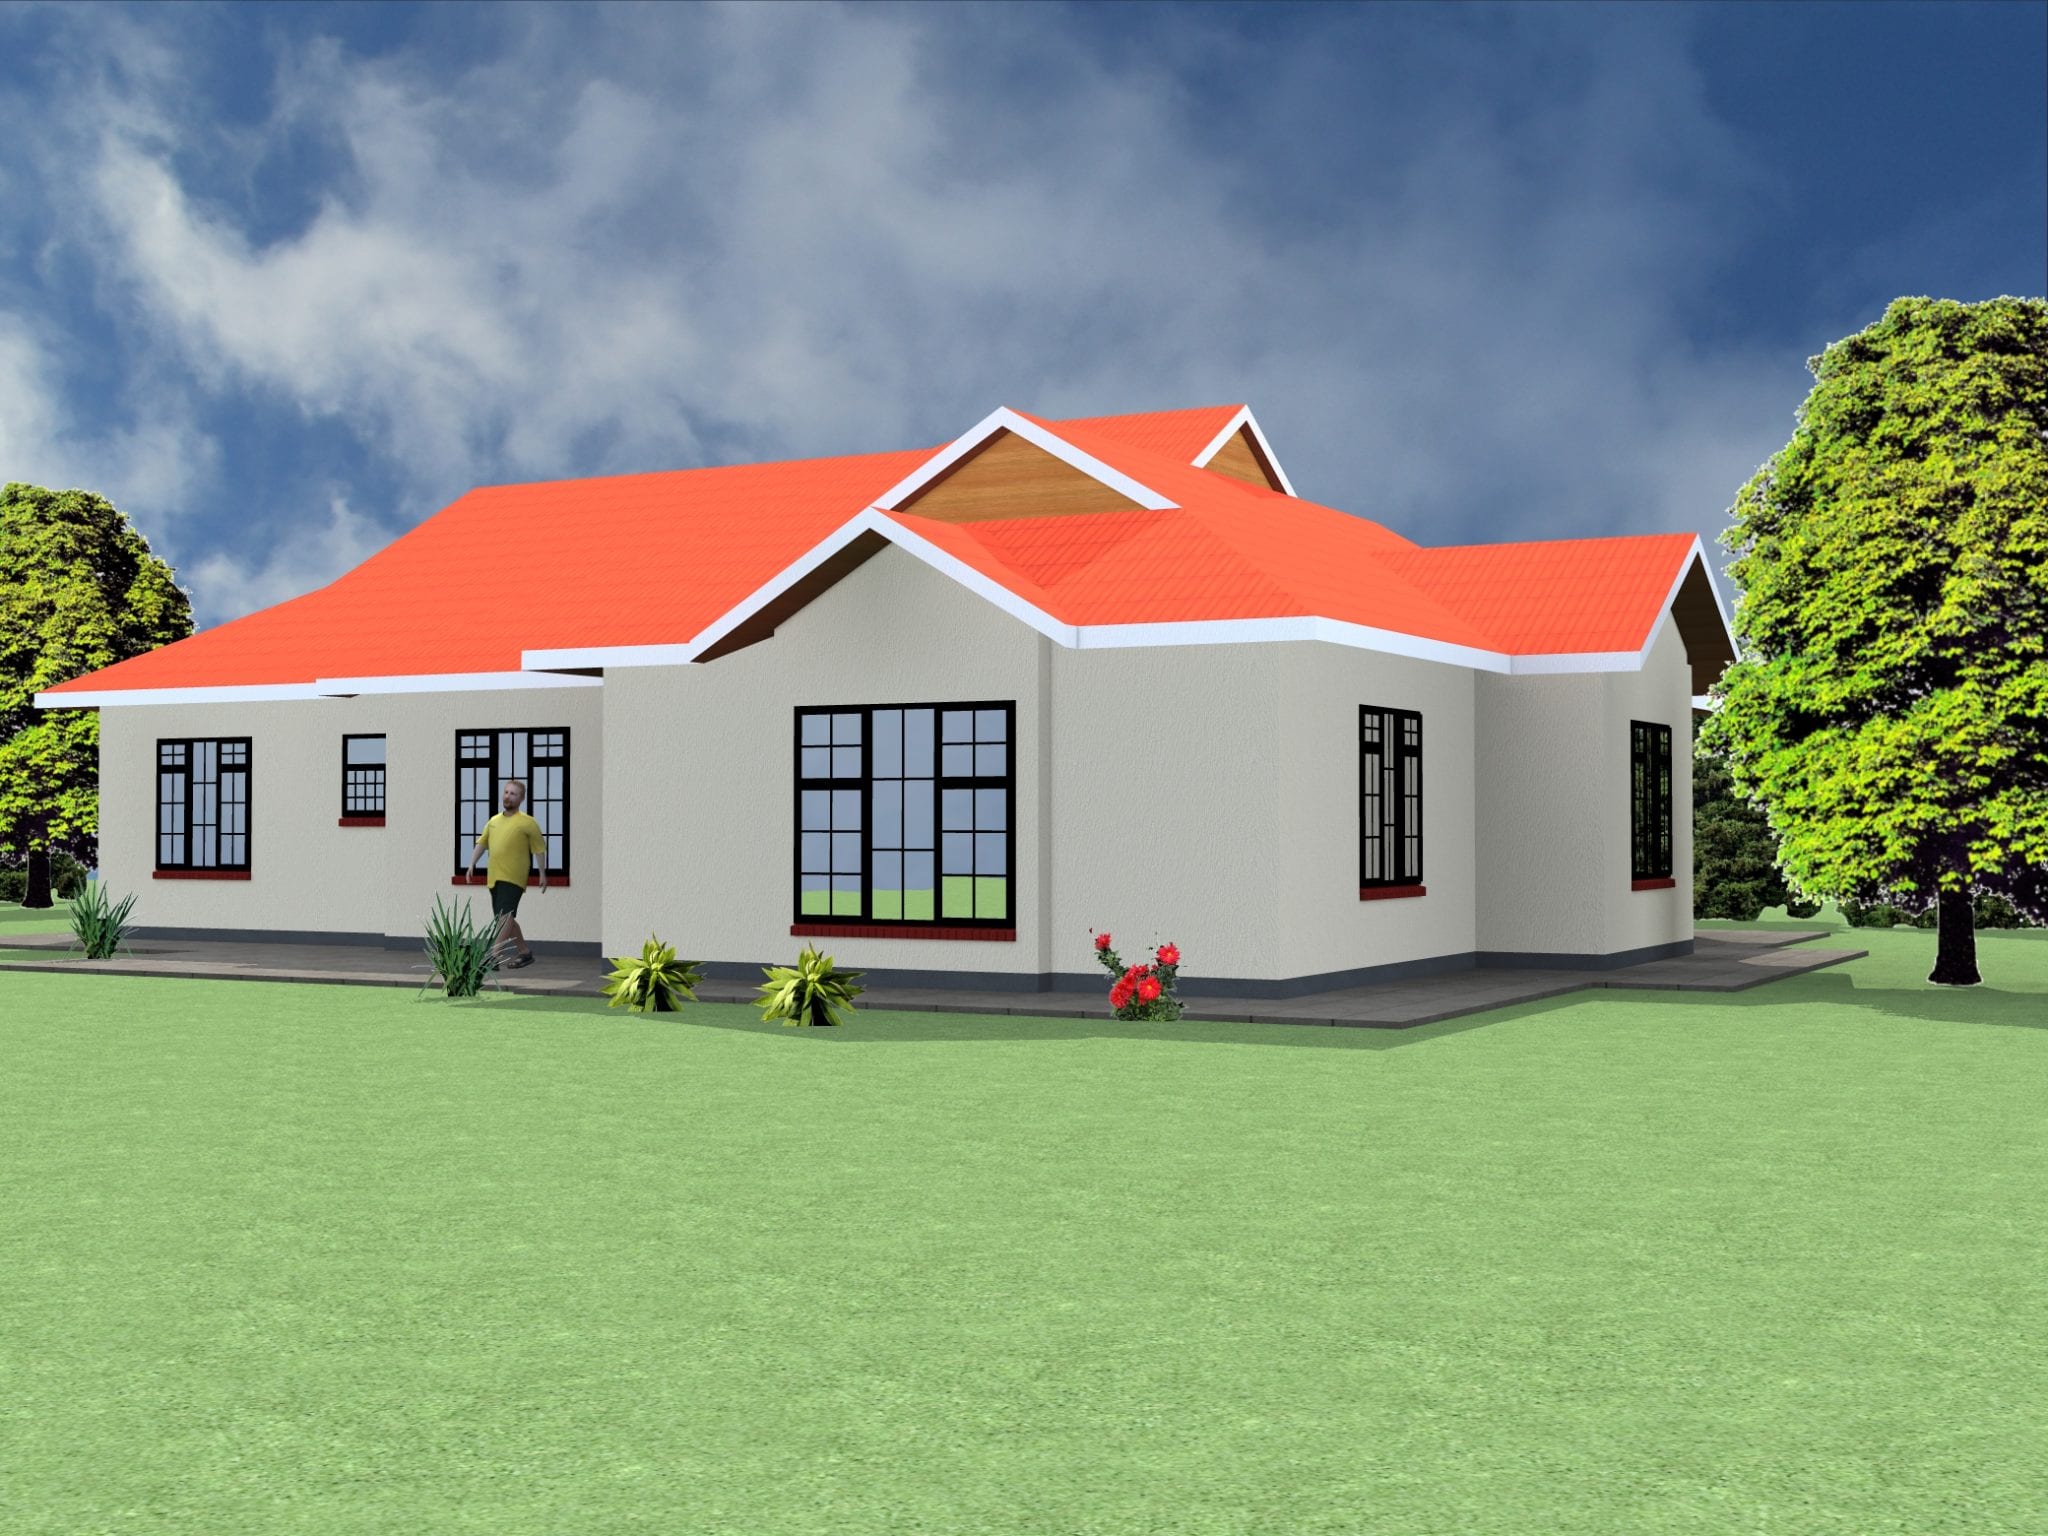 5 Bedroom House Plans Designs in Kenya | HPD Consult